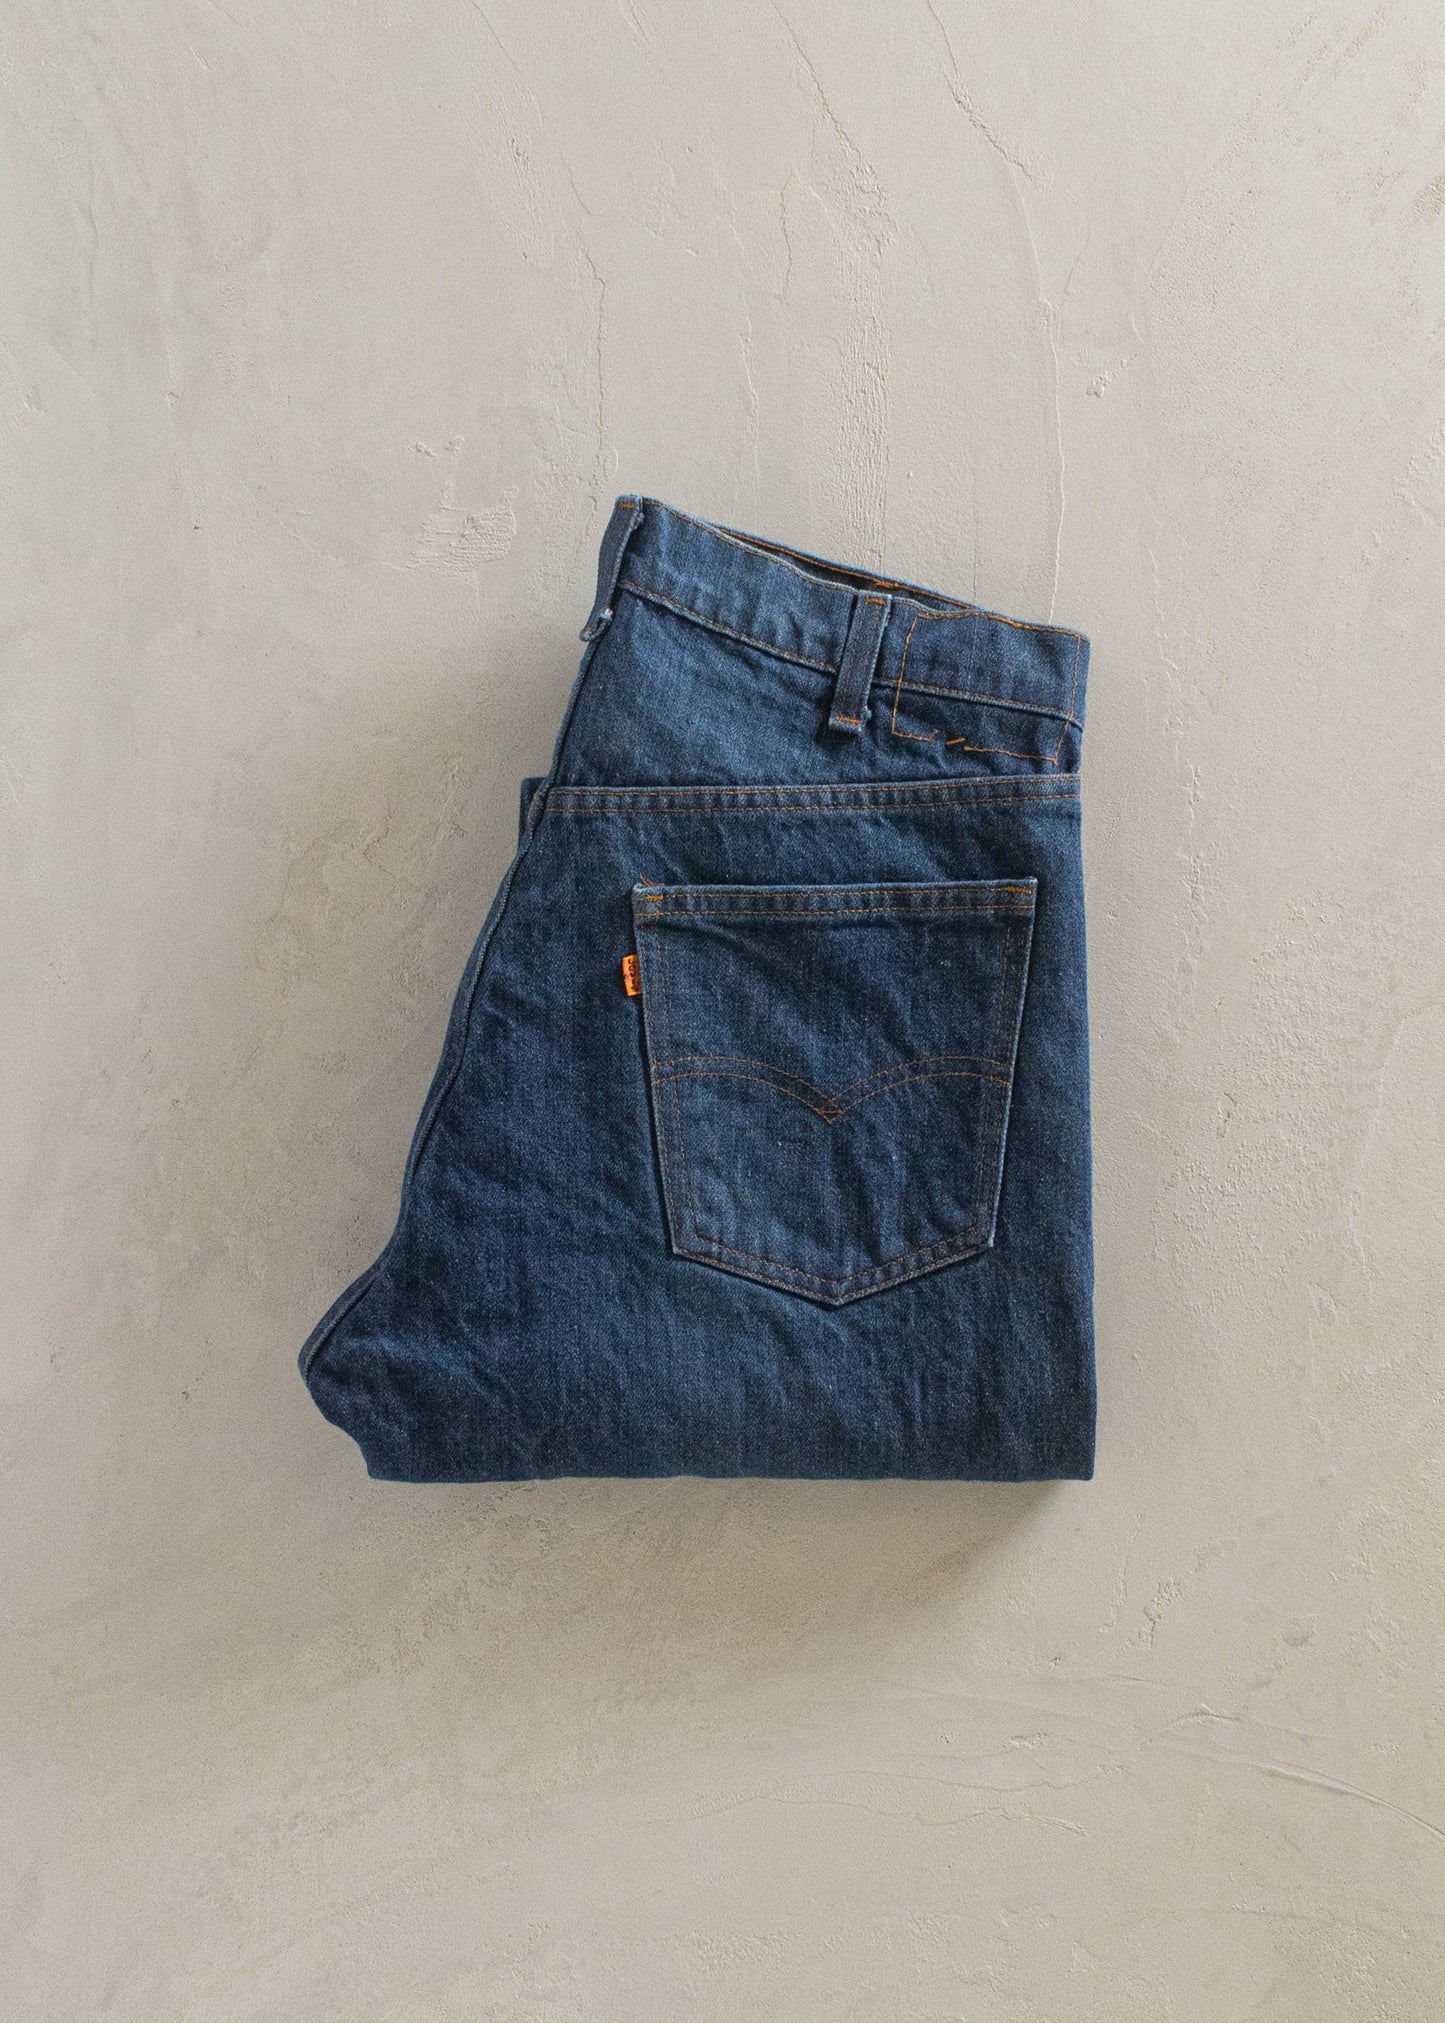 1980s Levi's Orange Tab Darkwash Jeans Size Women's 30 Men's 32